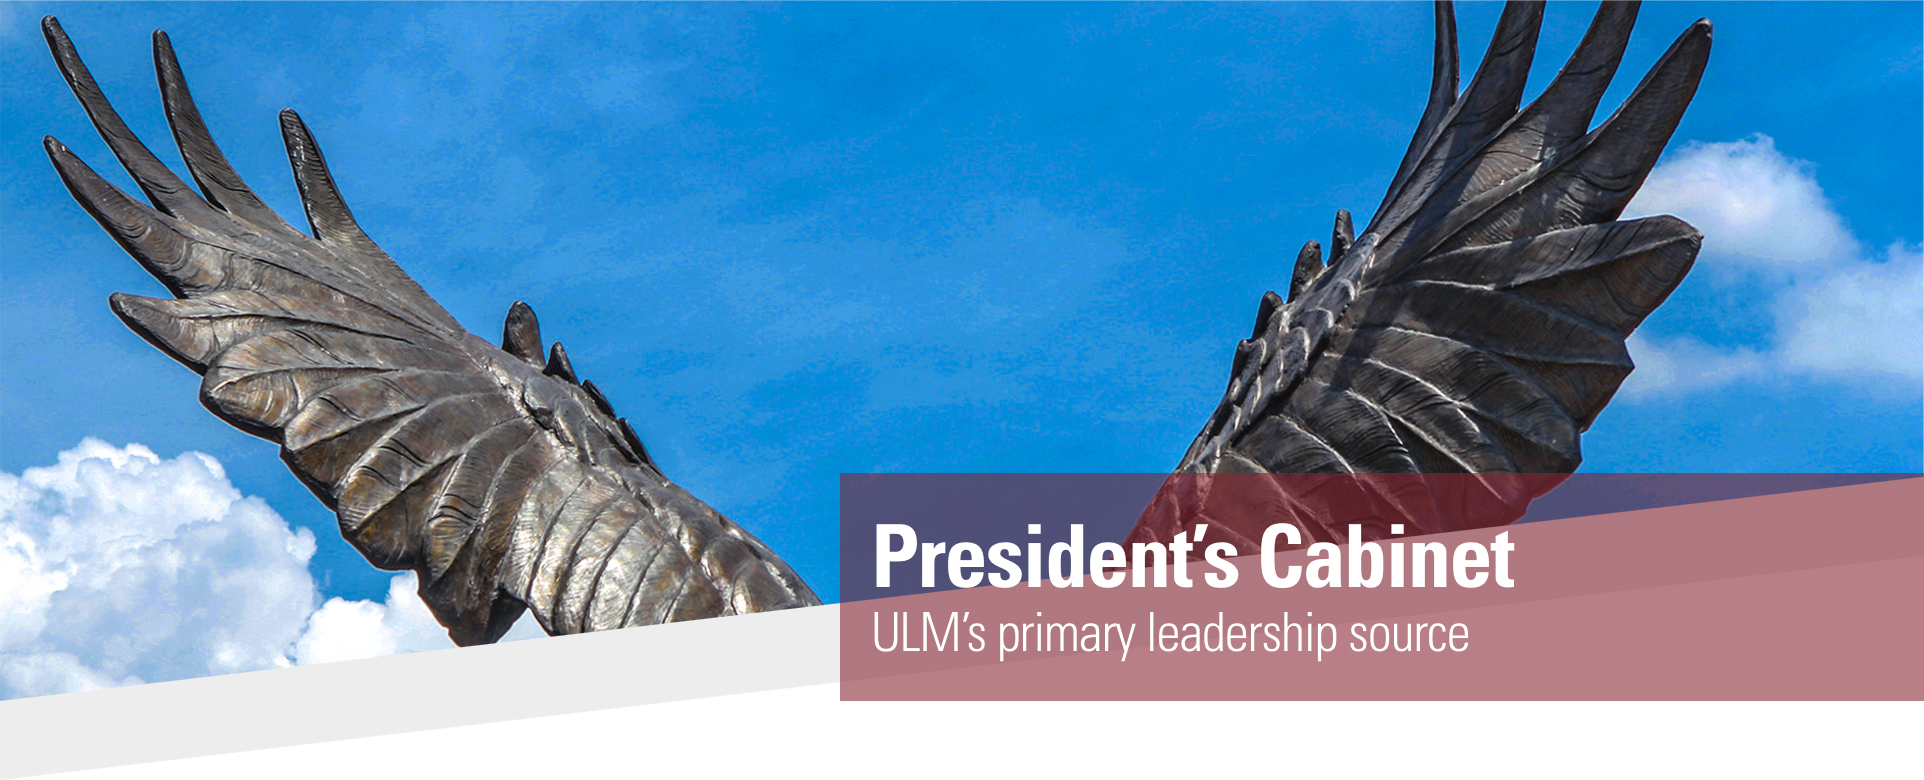 President's Cabinet ULM's primary leadership source